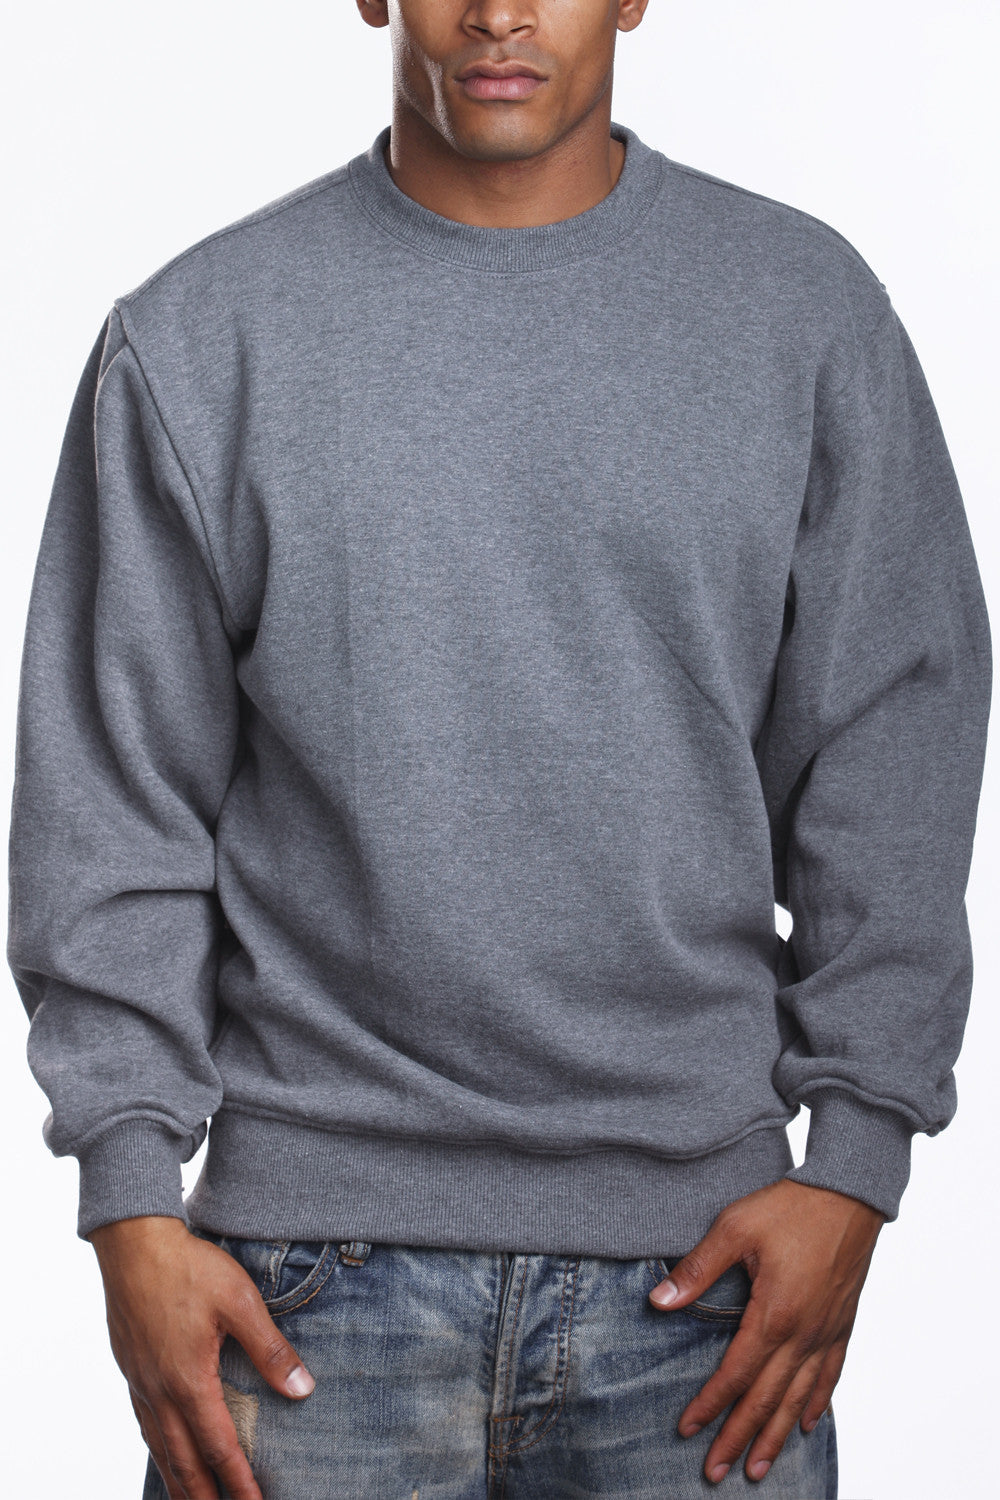 Sweatshirt, Pullover